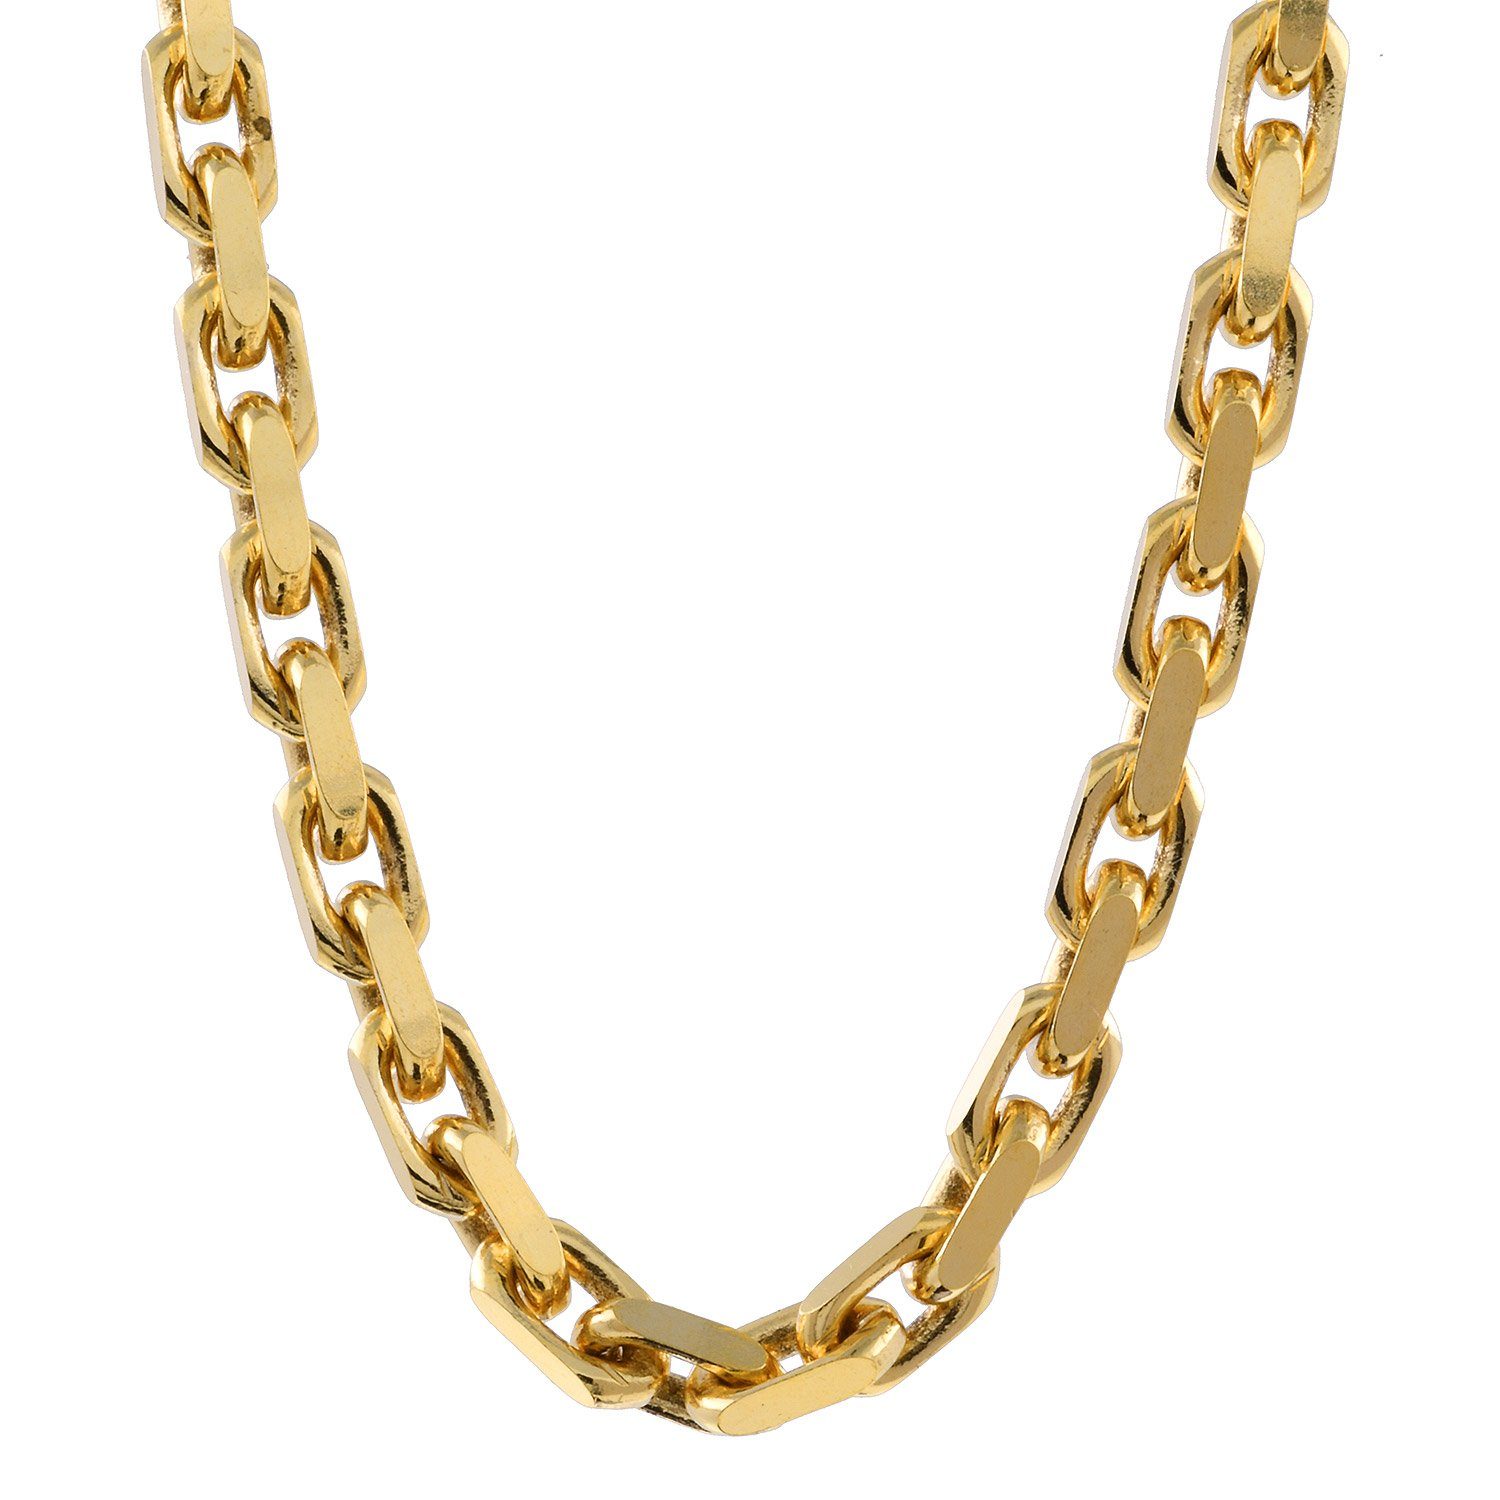 HOPLO Goldkette Ankerkette diamantiert 750 - 18 Karat Gold 2,5 mm 55 cm  Halskette, Made in Germany, Edle Kette in Juwelier Qualität